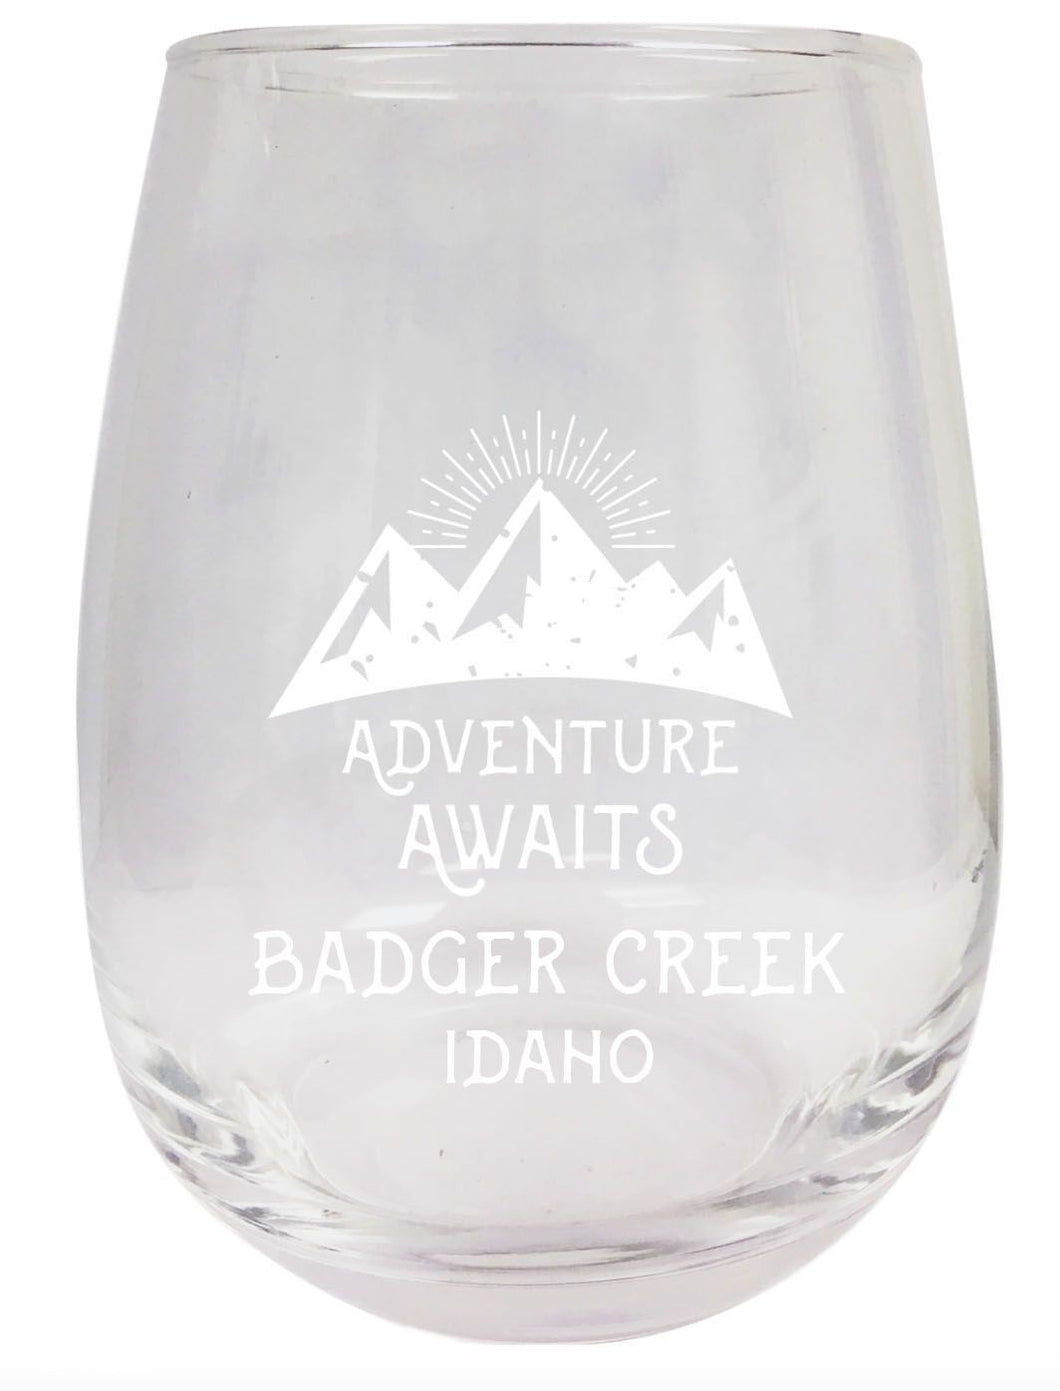 Idaho Engraved Stemless Wine Glass Duo